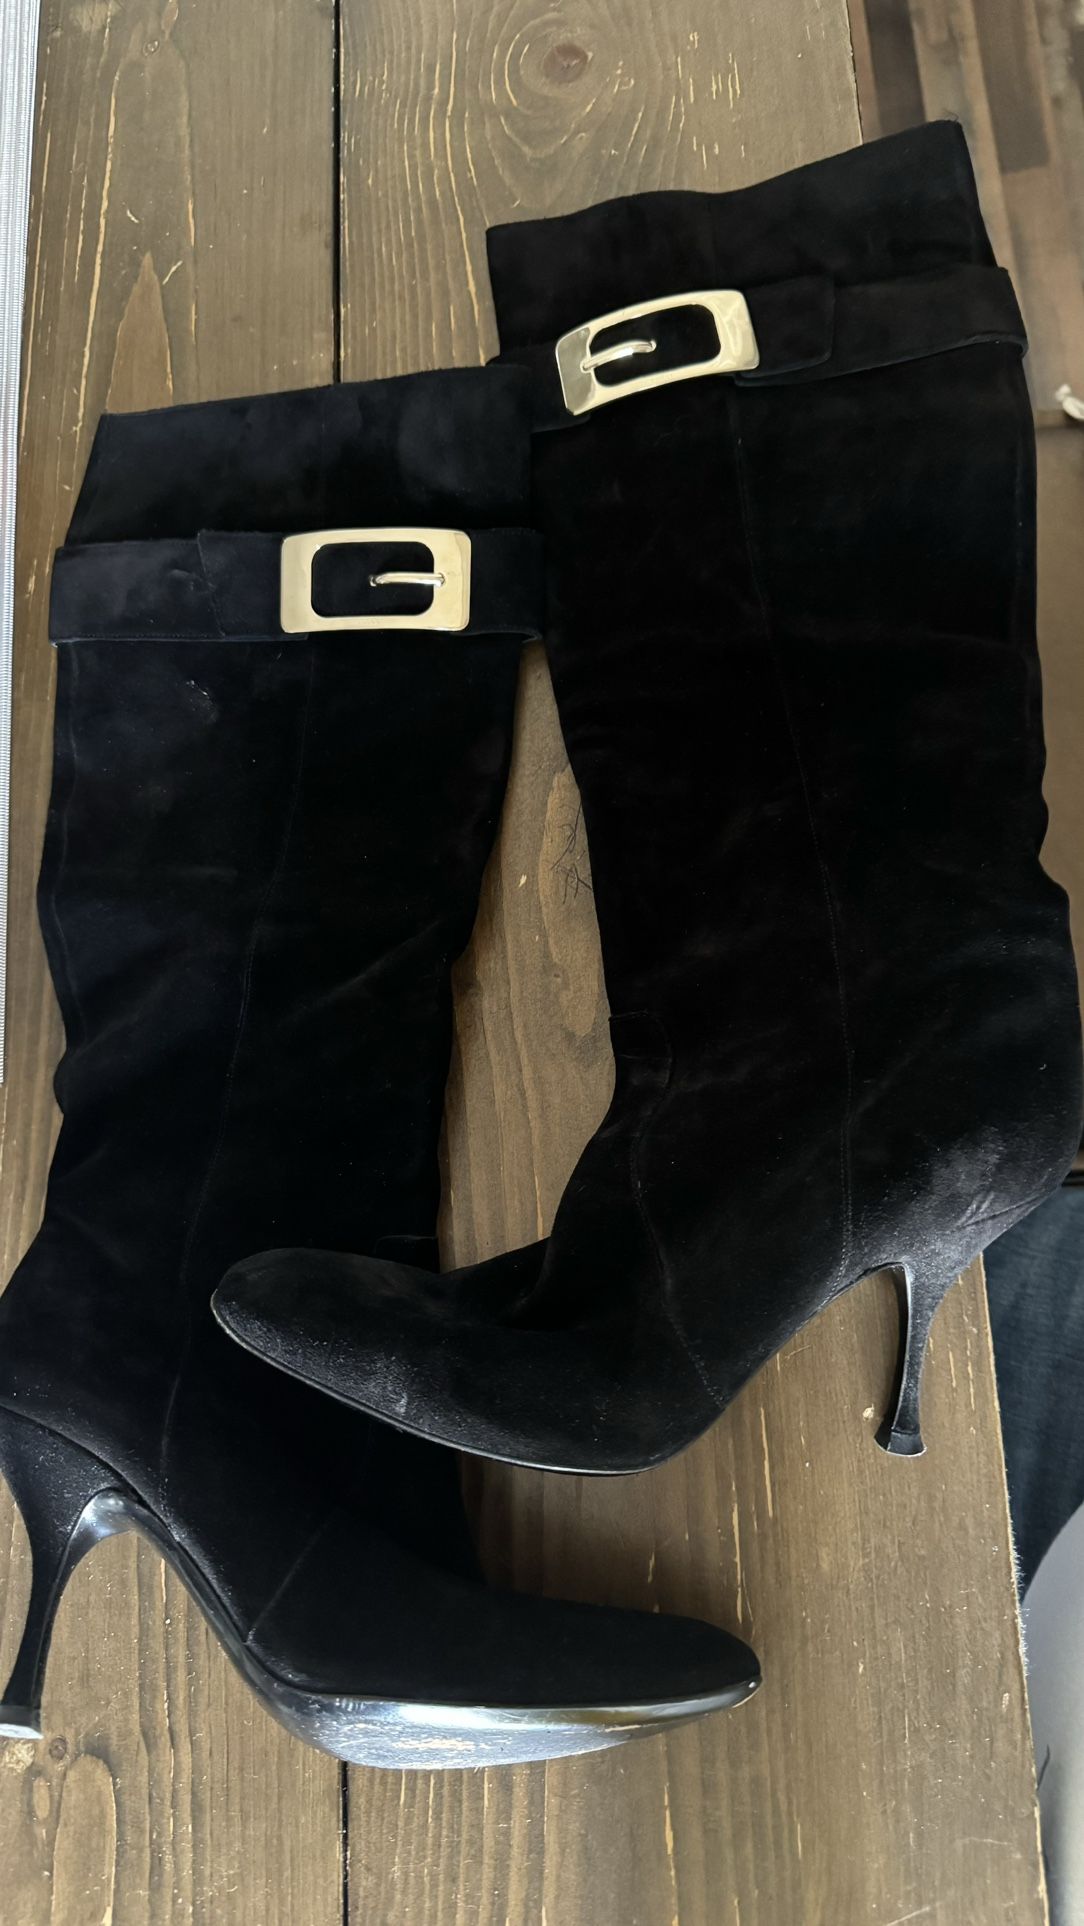 Gucci High Boots 8 1/2B Original Price $1,195